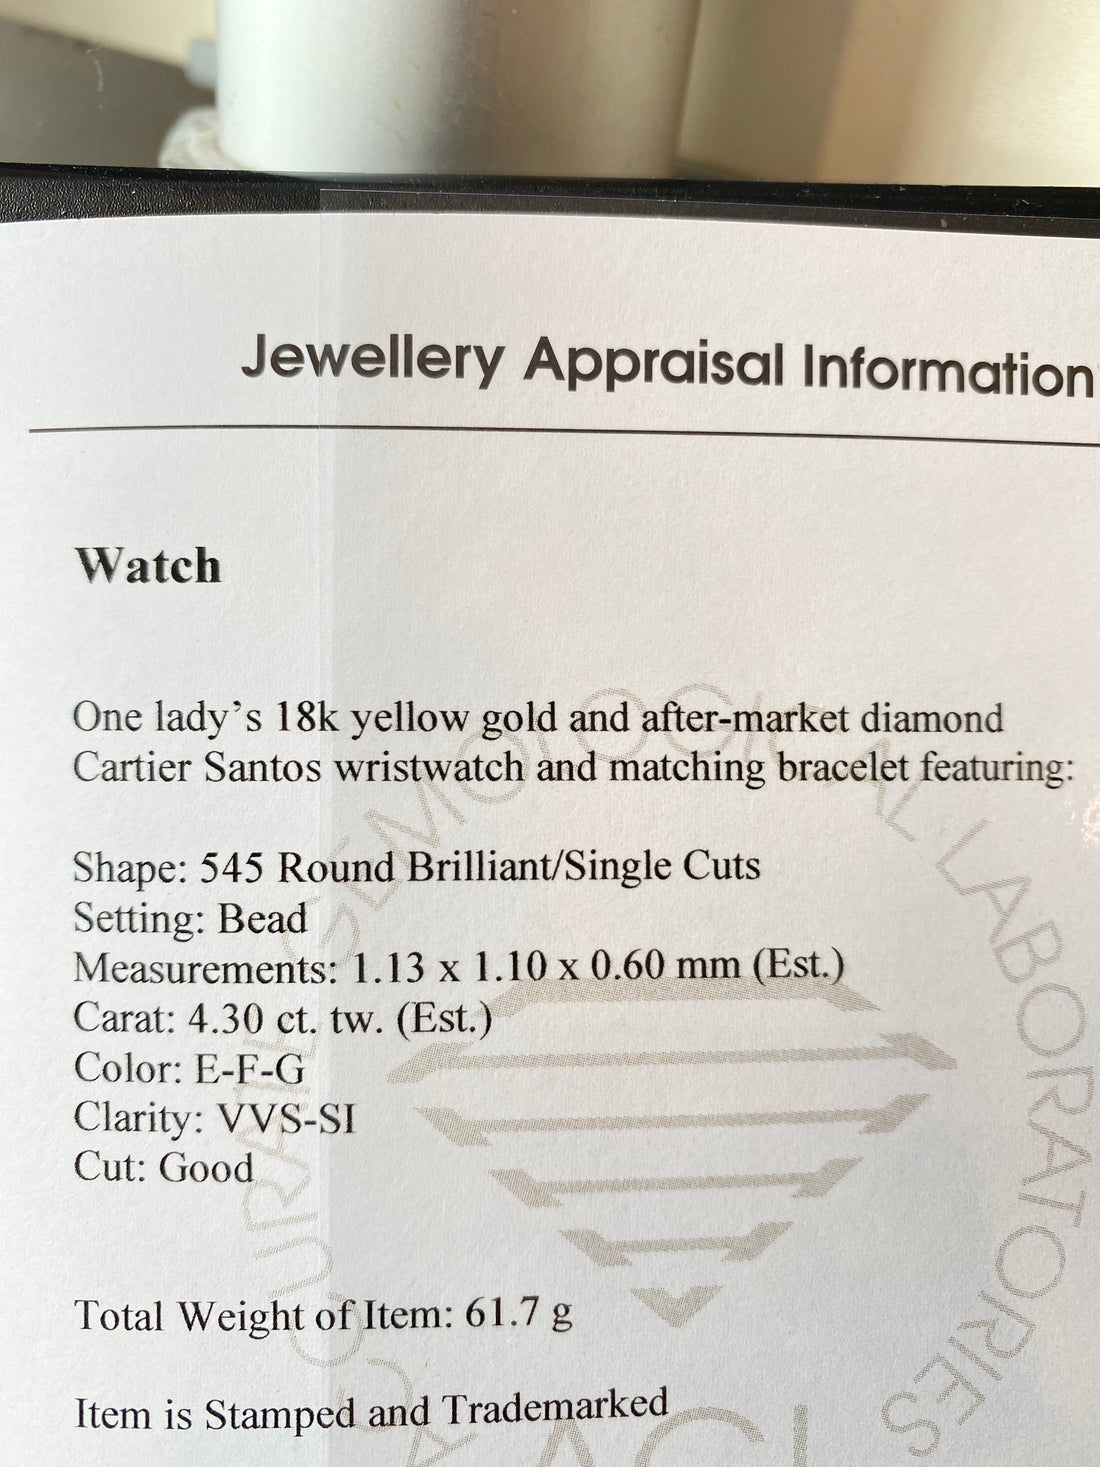 Cartier 18K Yellow Gold Mini 22mm Panthere Ladies Diamond Watch